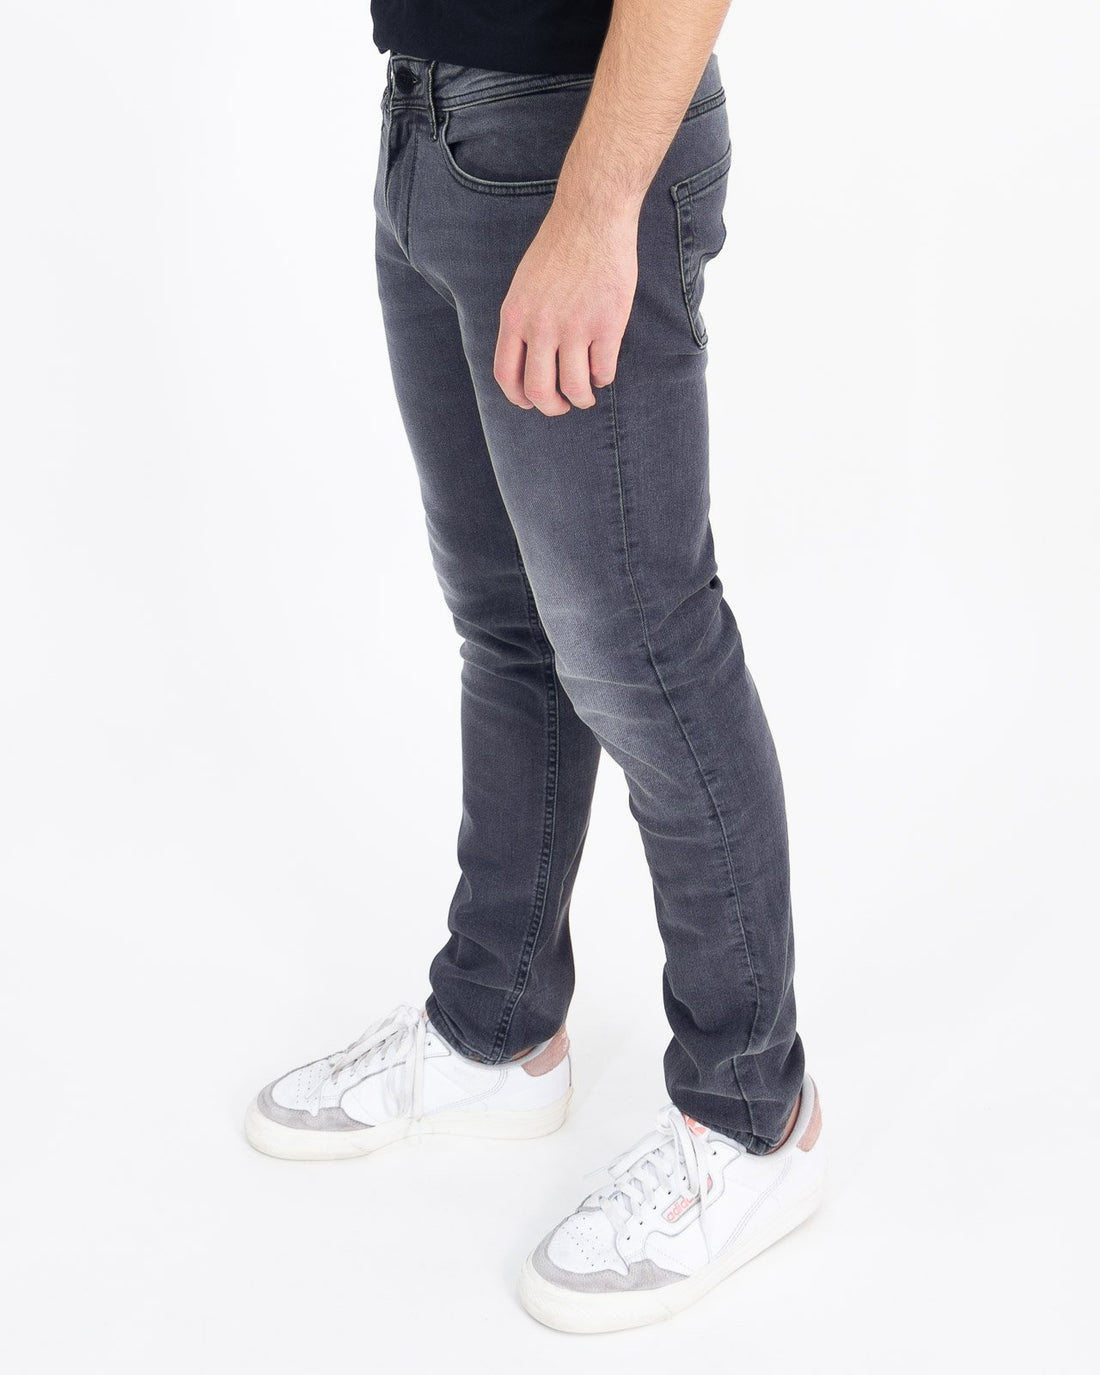 Gray five pocket jeans